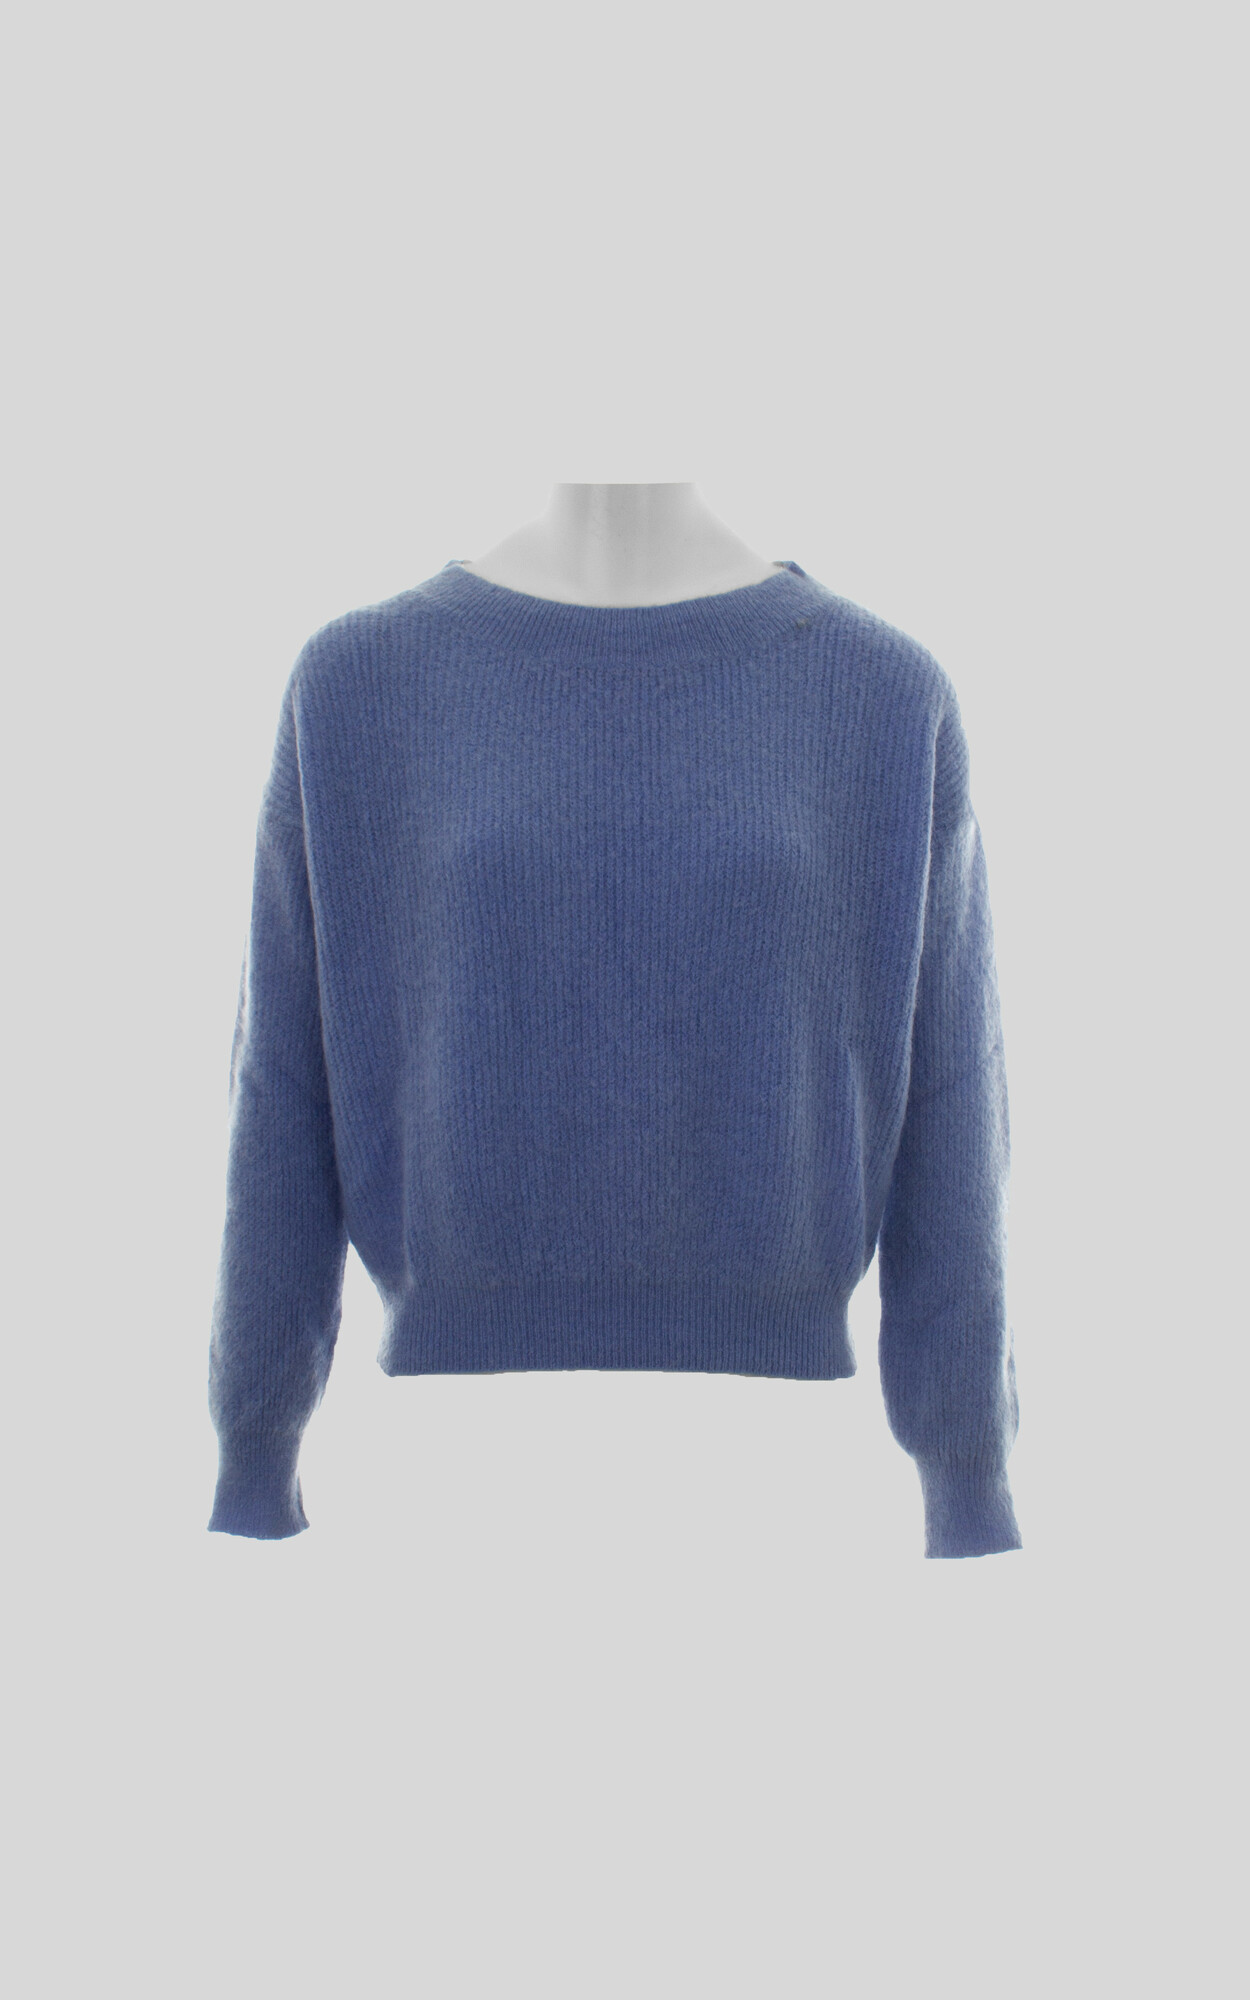 Jeans Sweater/trui